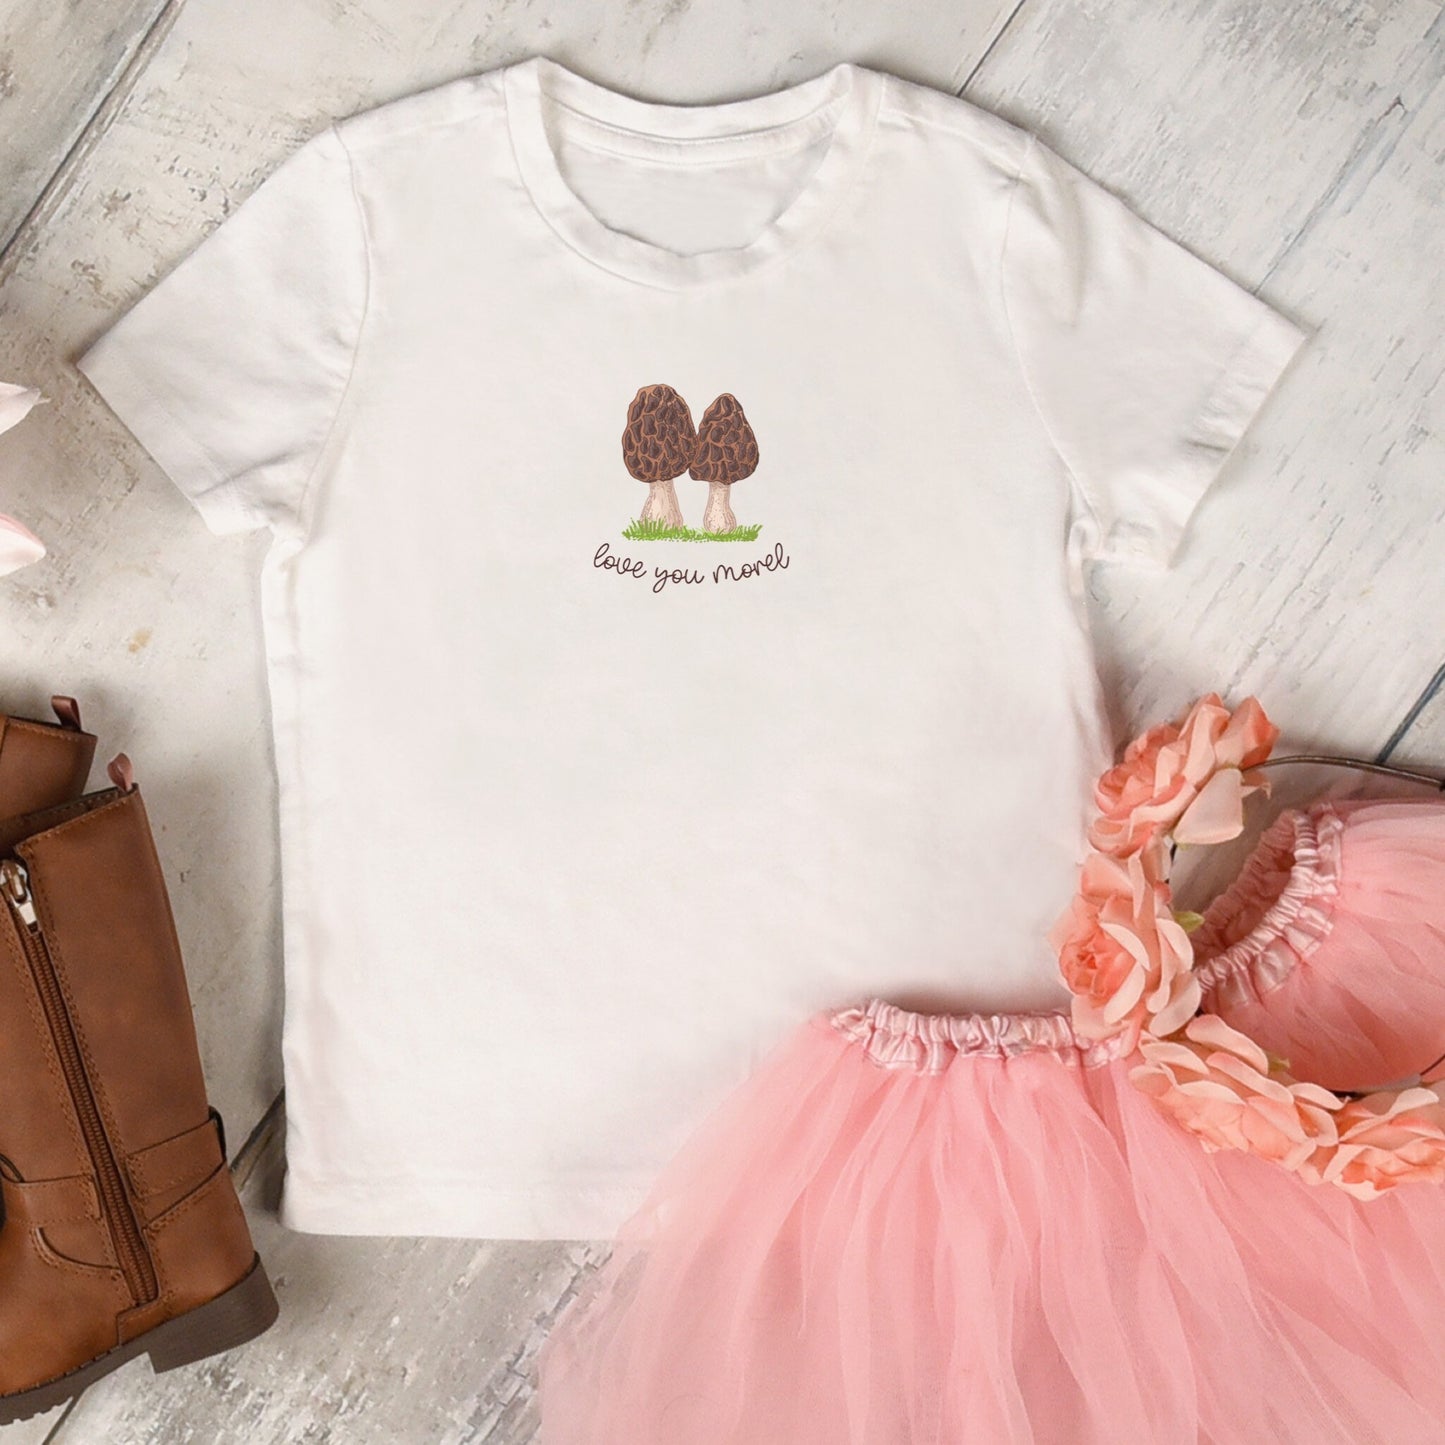 Mushroom Shirt For Kids, Toddler Mushroom Shirt, Youth Mushroom Shirt, Morel Shirt, Love You Morel, Matching Child Shirt, Girls Mushroom Tee